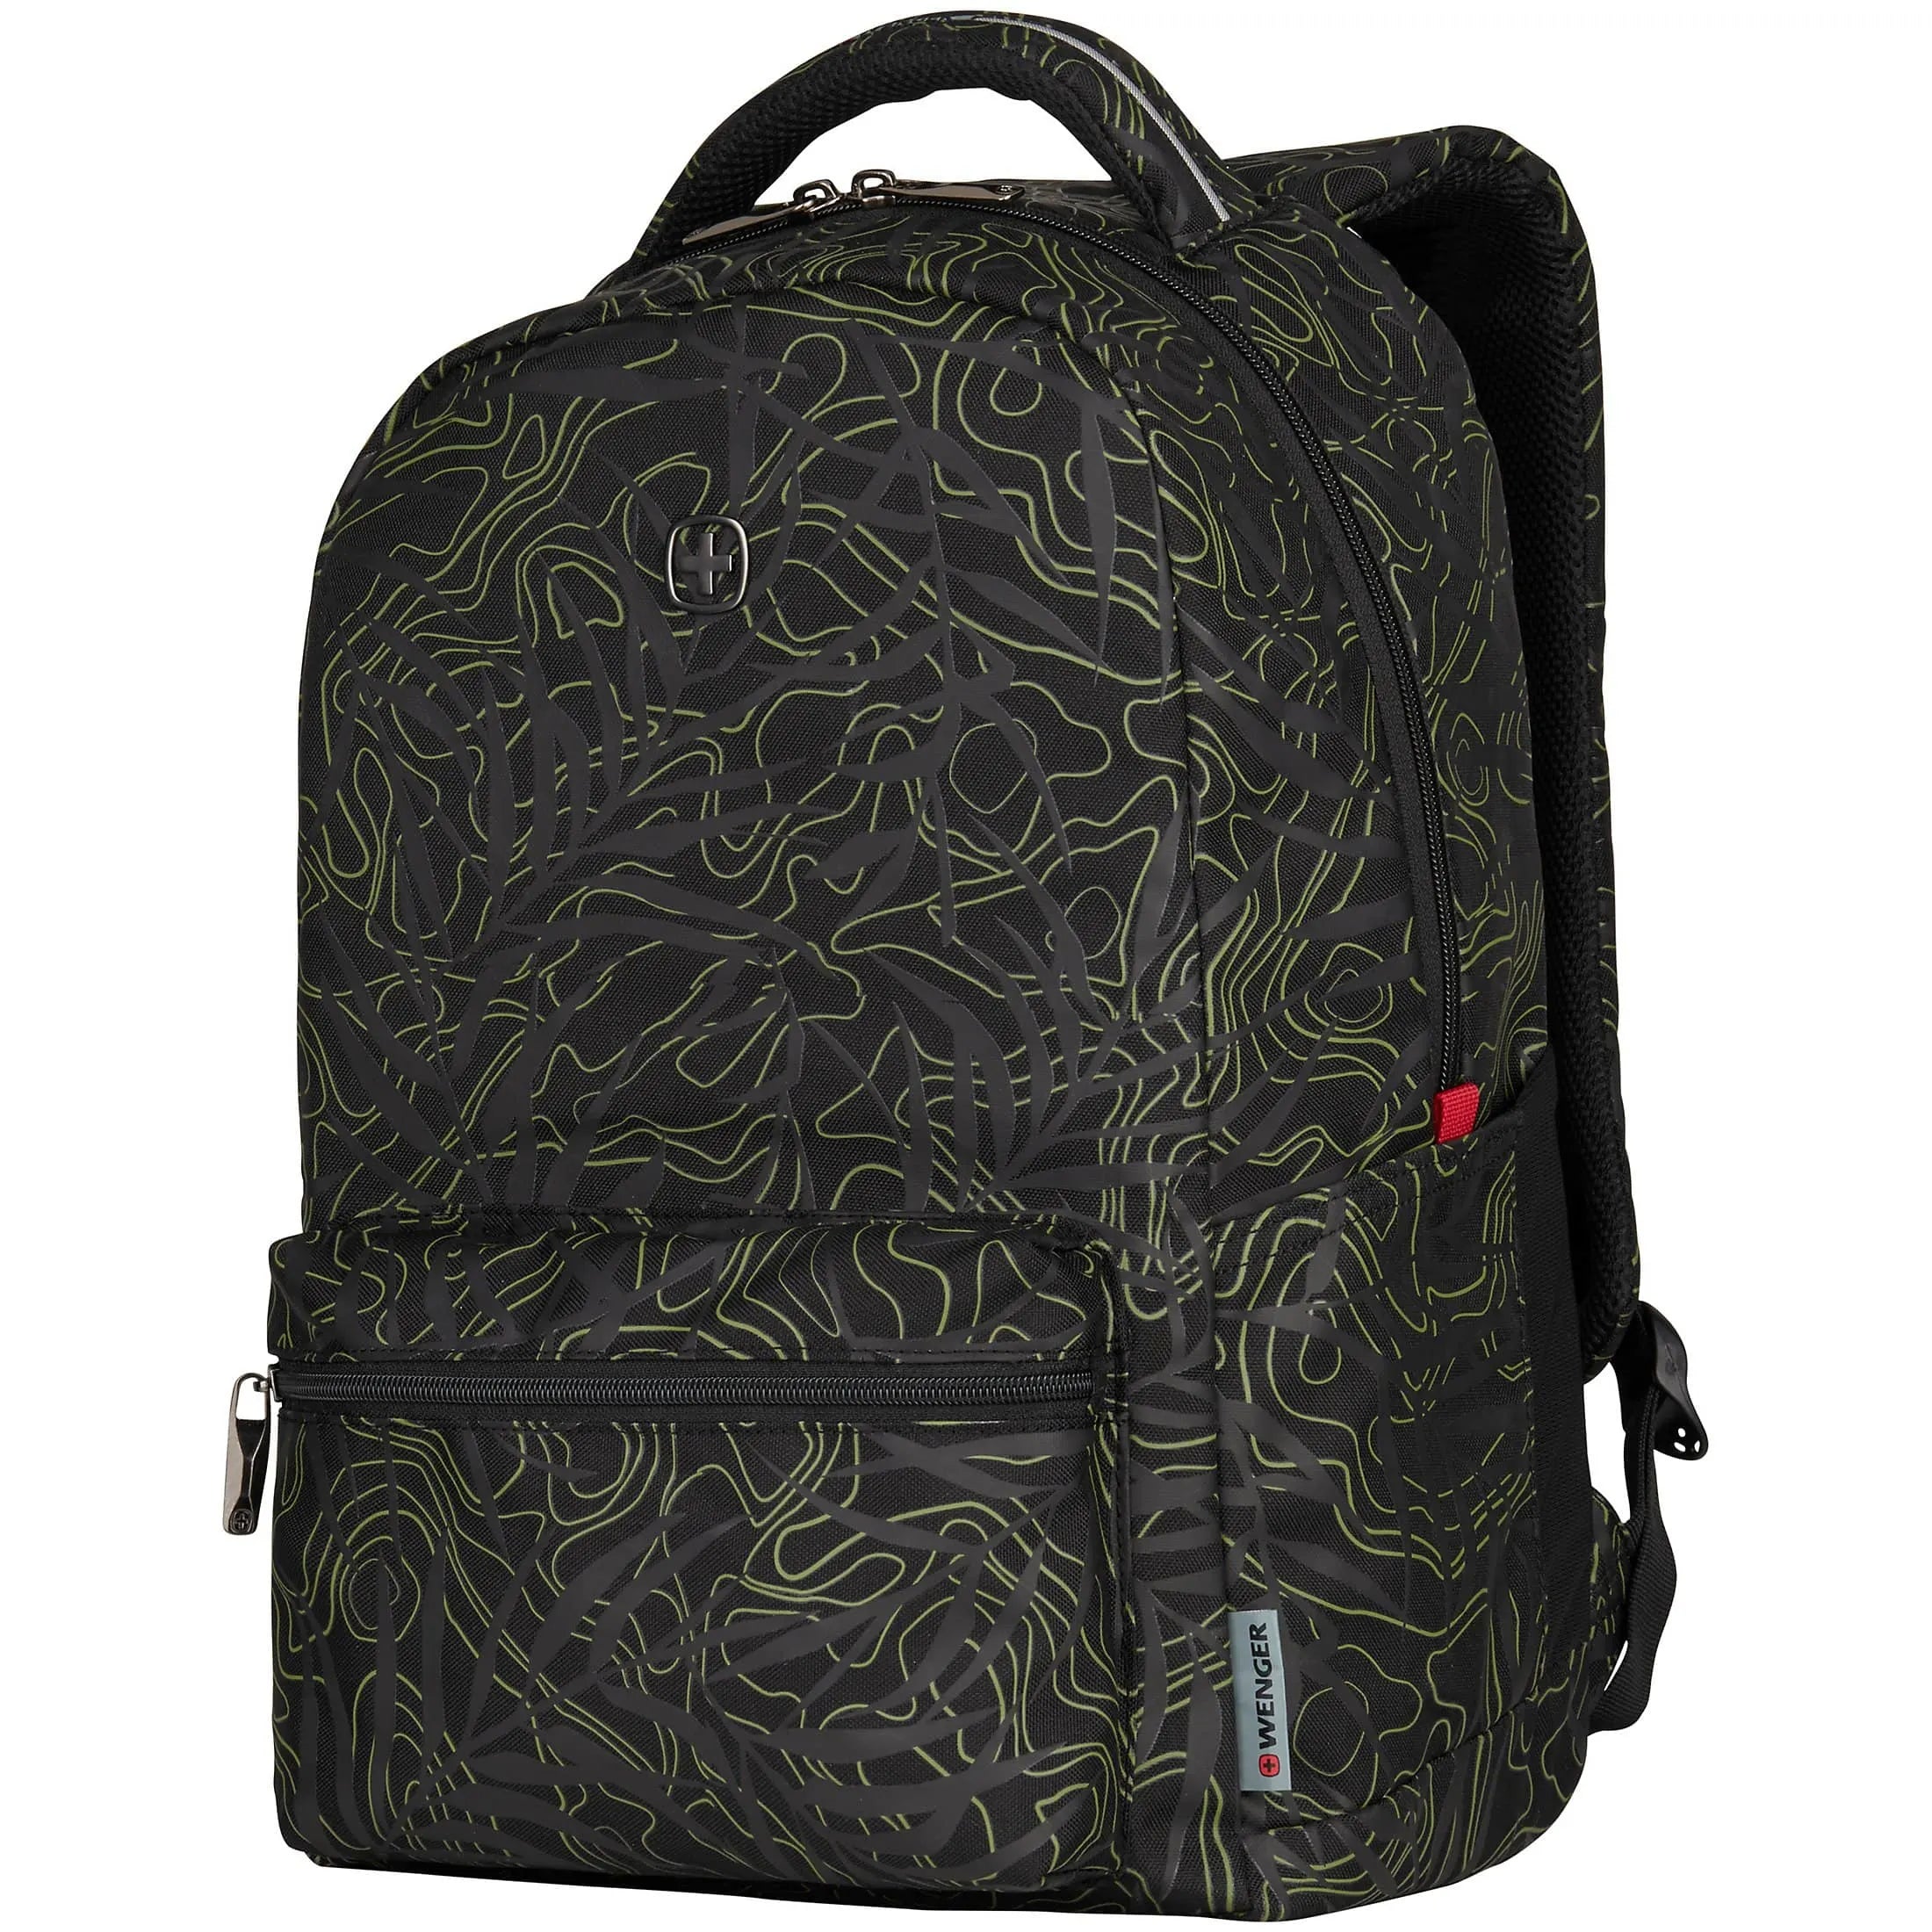 Wenger Business Colleague Laptop Backpack 16 inch 45 cm - Balck Fern Print